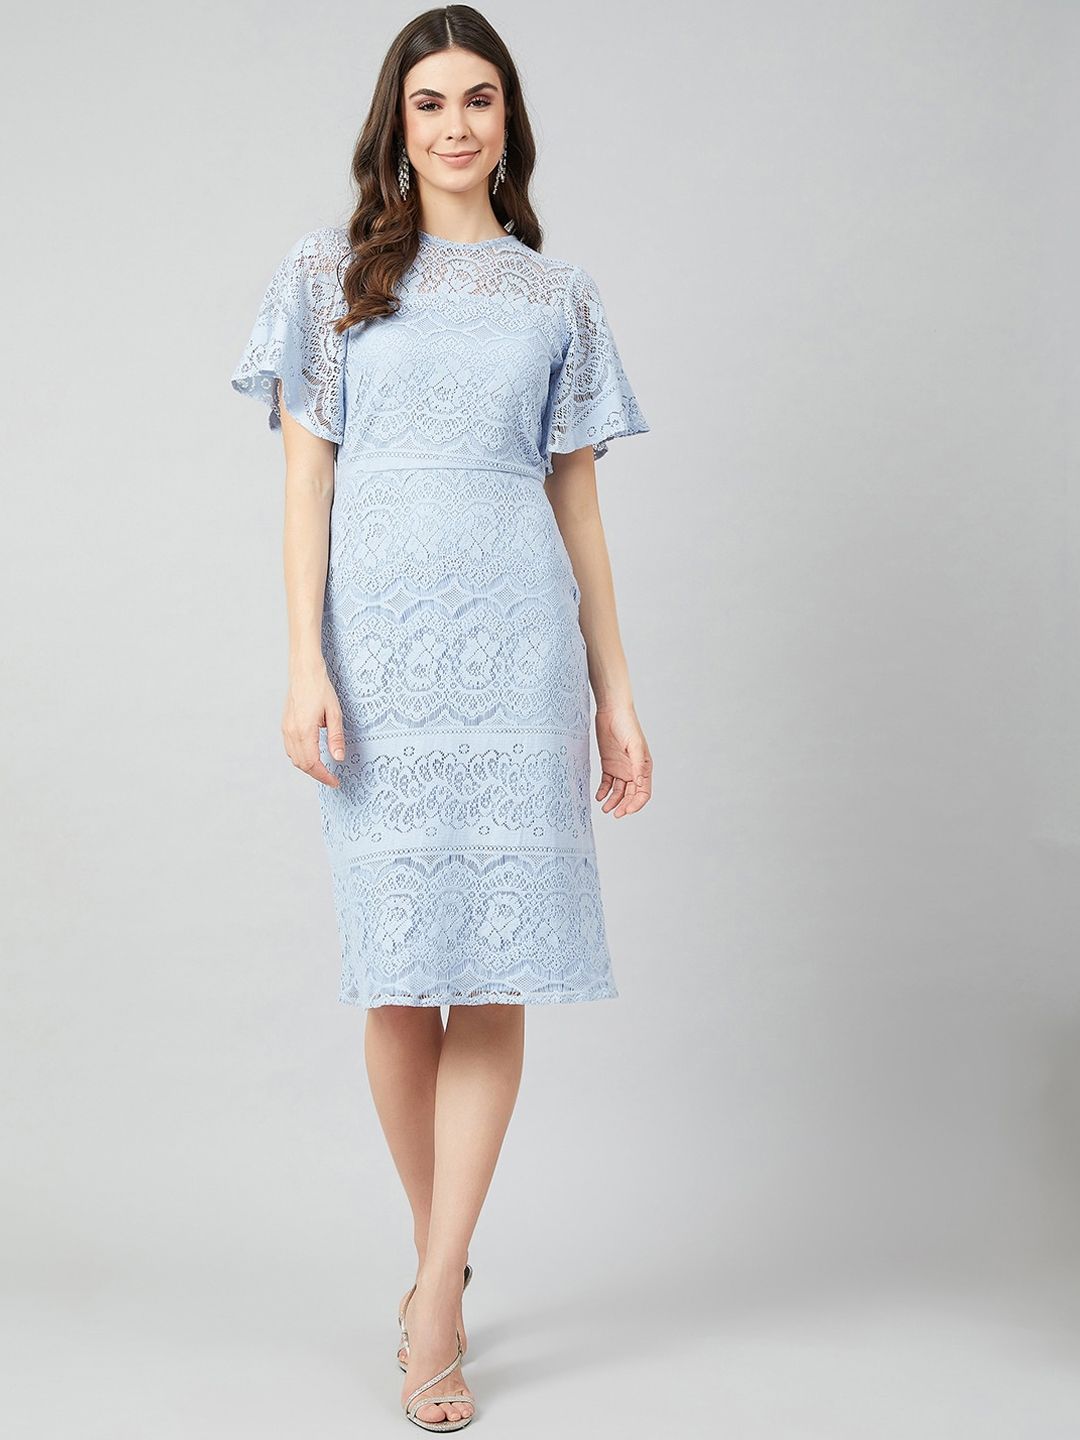 Athena Blue Self Design Sheath Dress Price in India